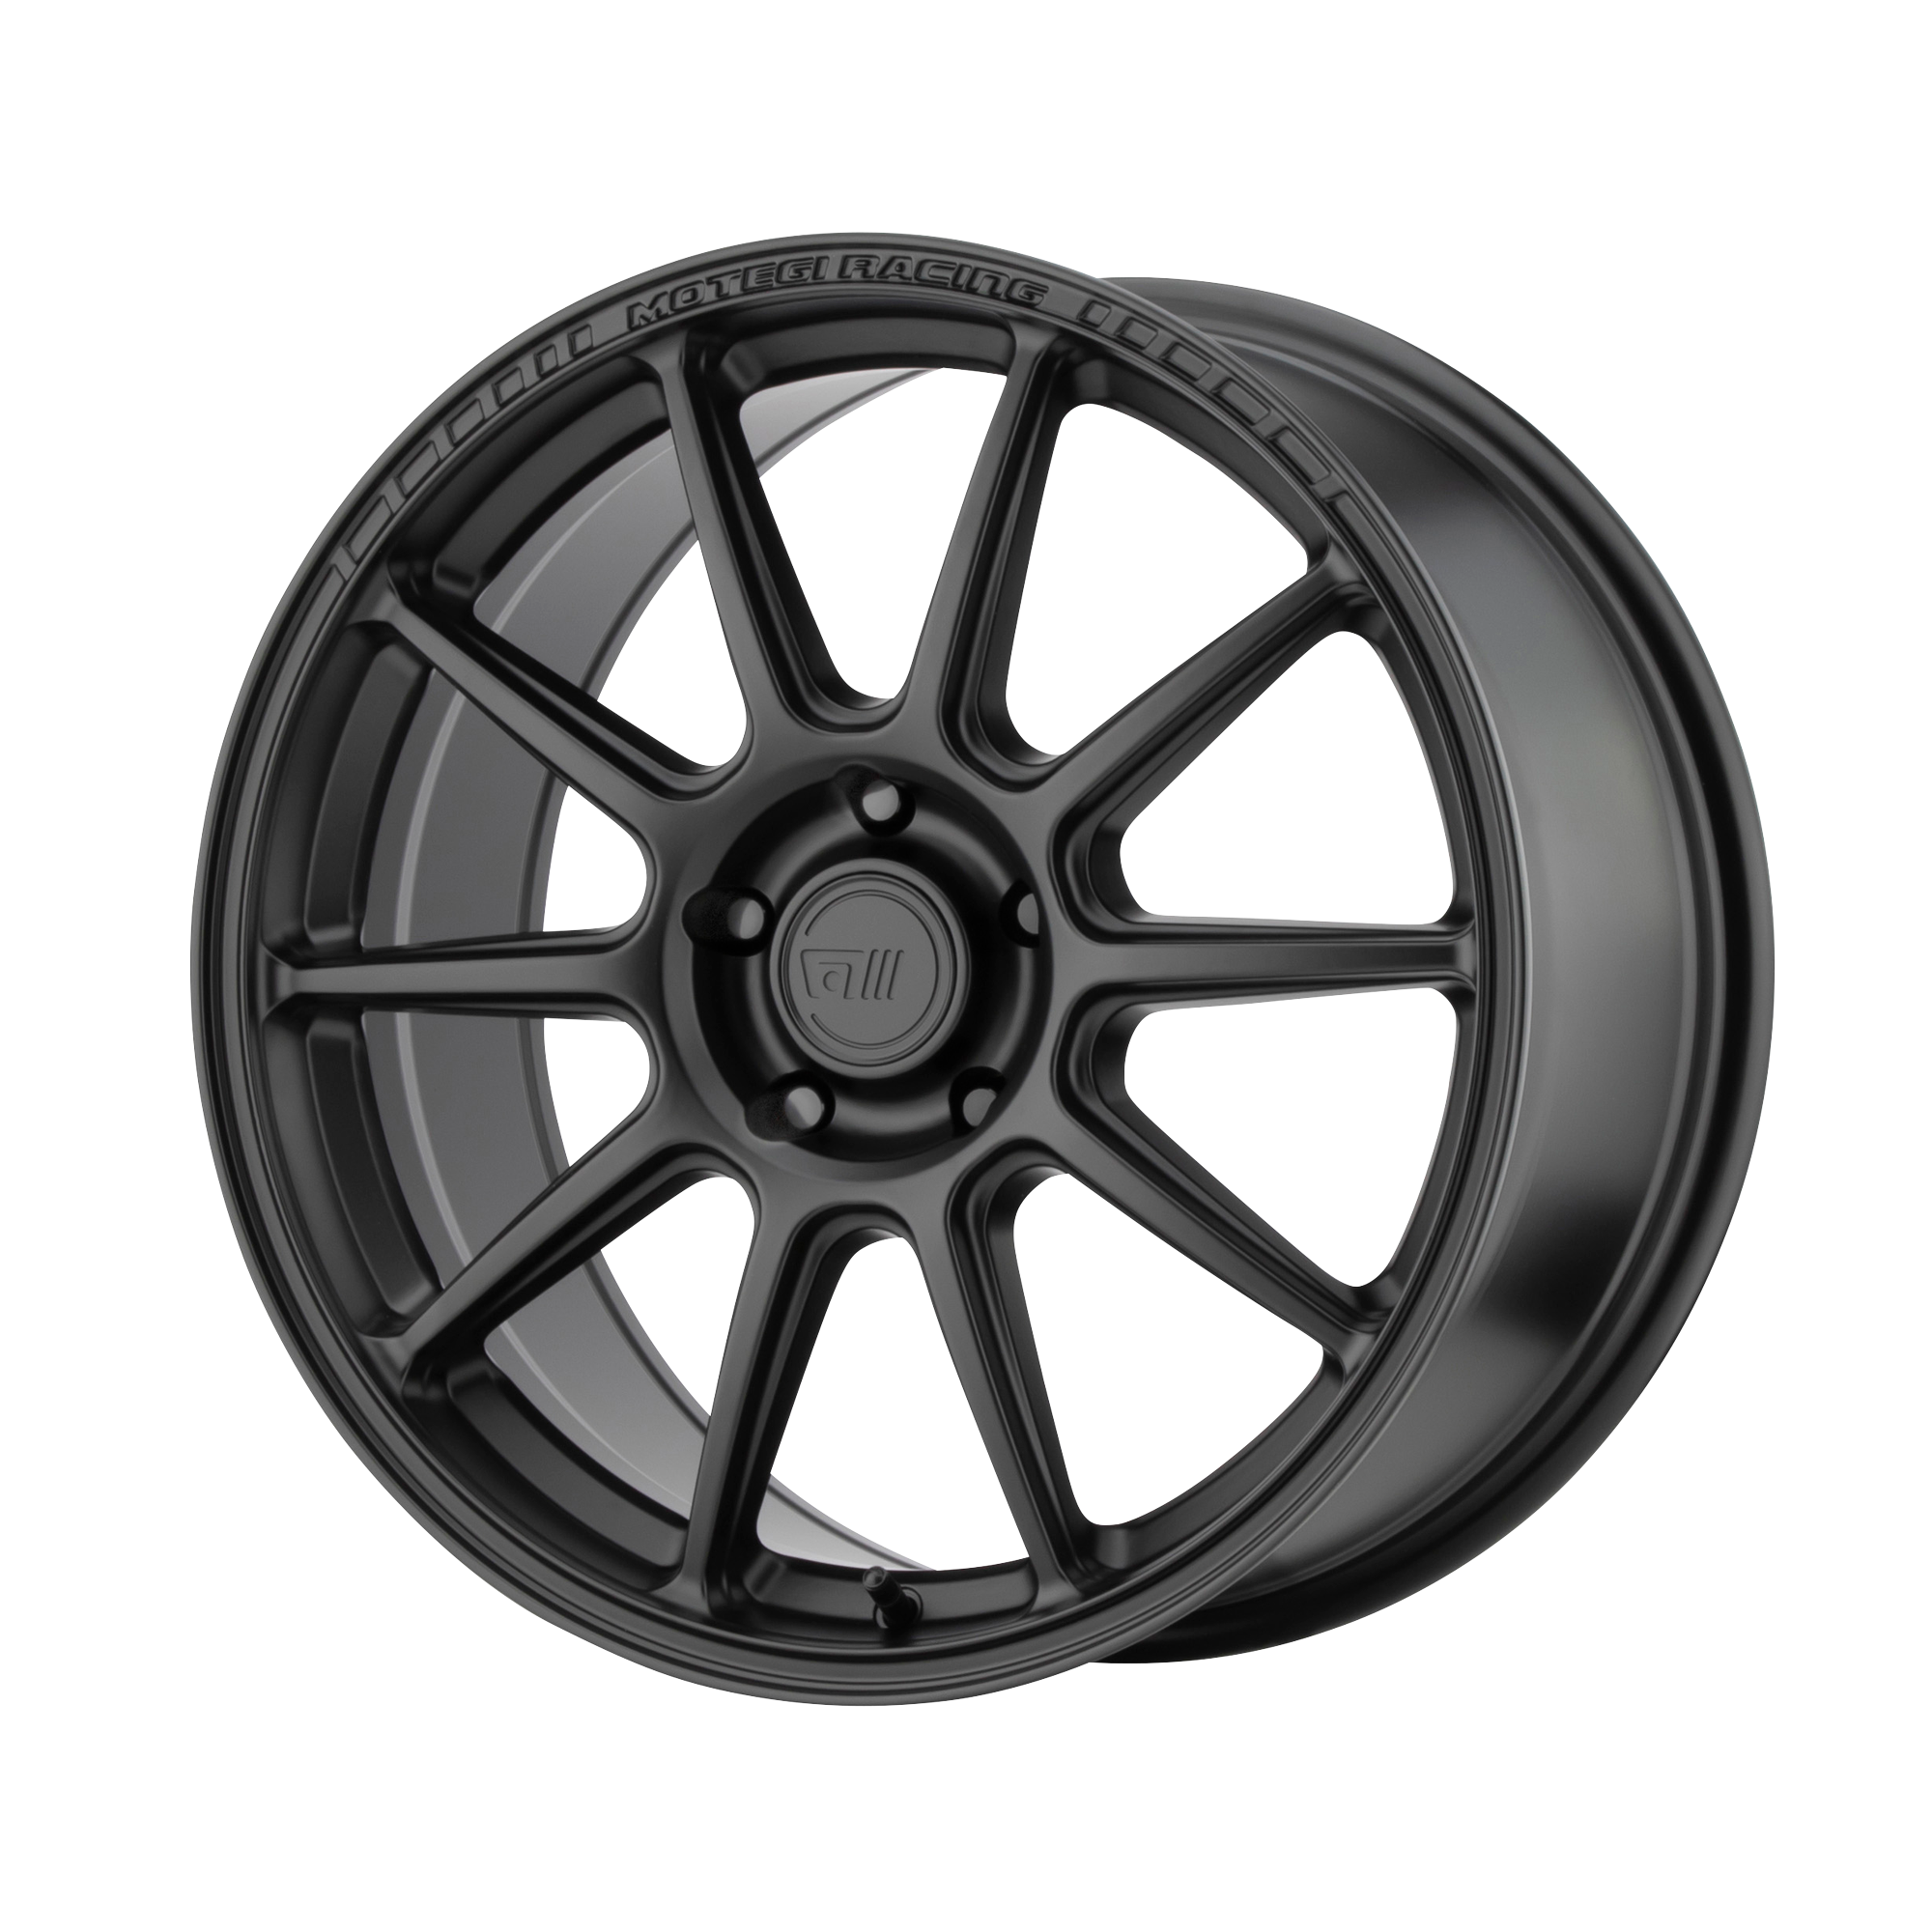 MR140 18x8.5 5x112.00 SATIN BLACK (45 mm) - Tires and Engine Performance